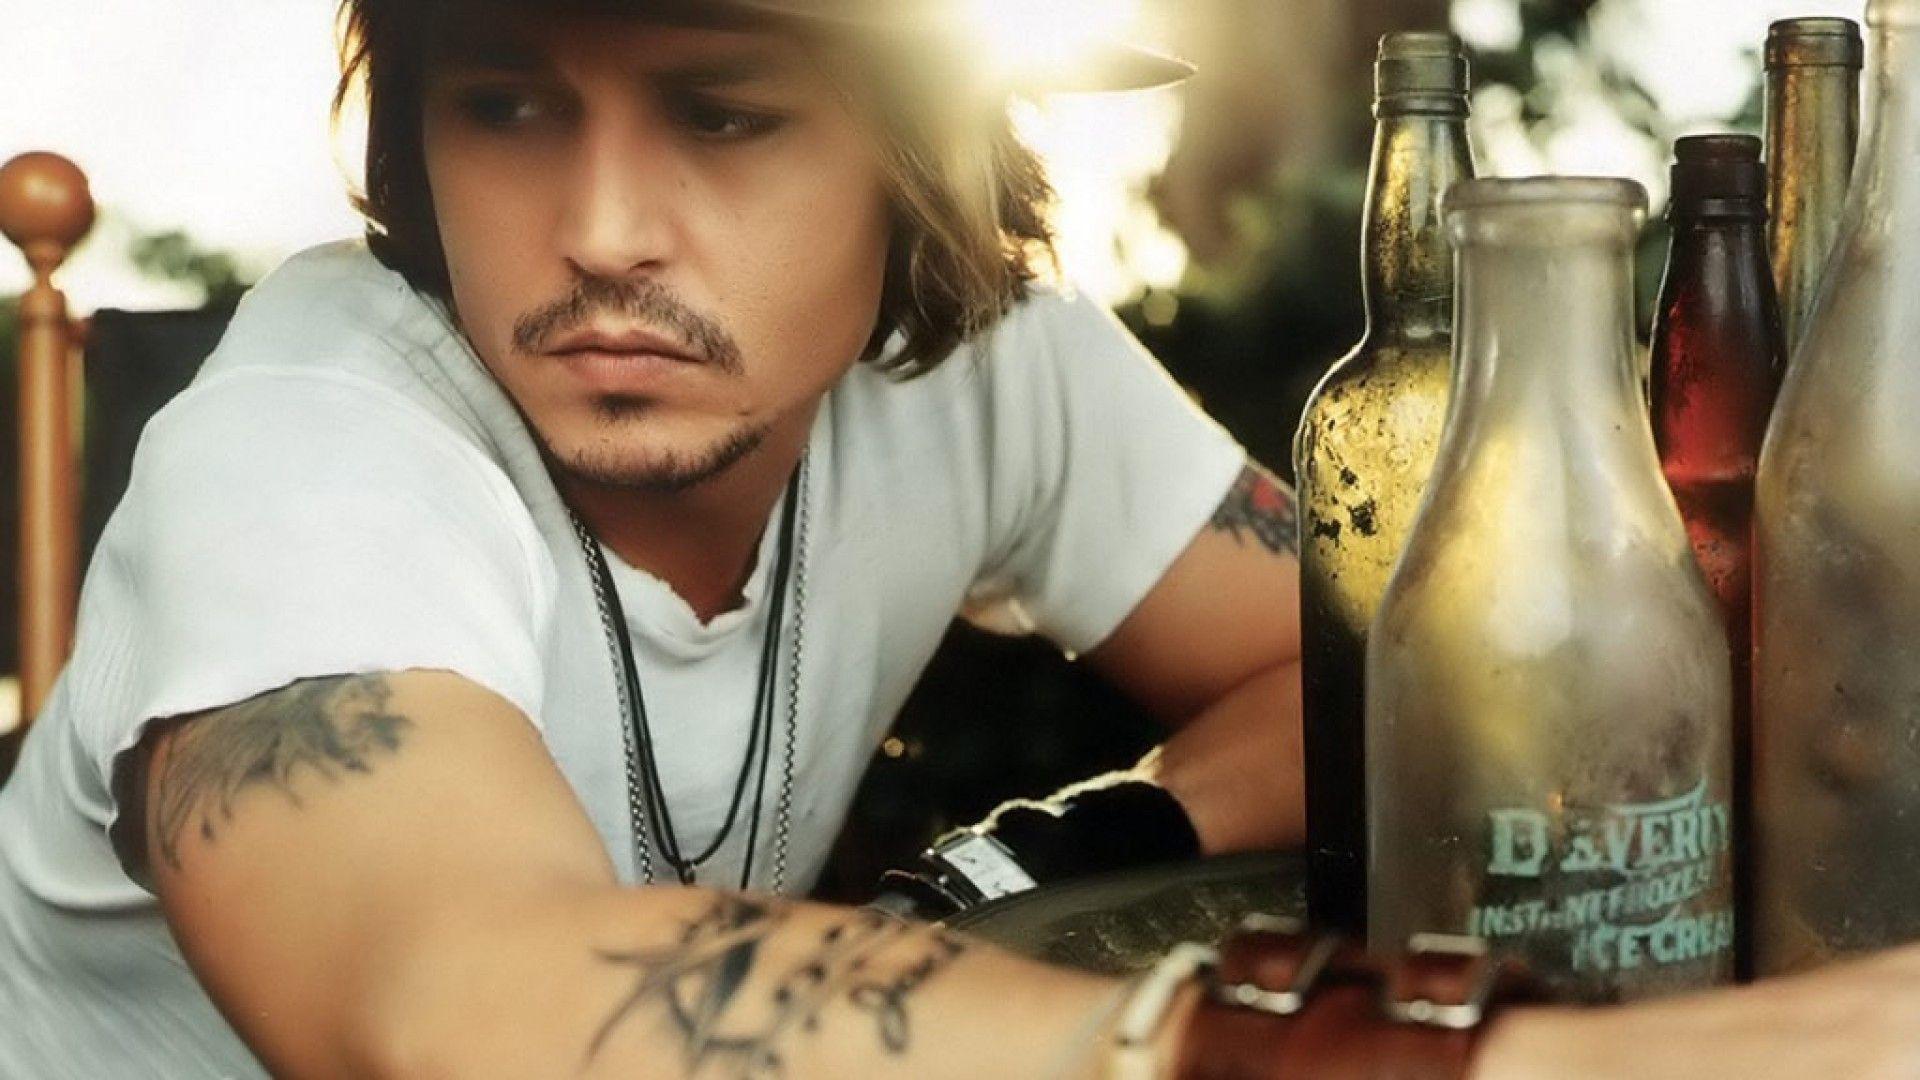 Johnny Depp Wallpaper. Free Download HD New Hollywood Actors Image